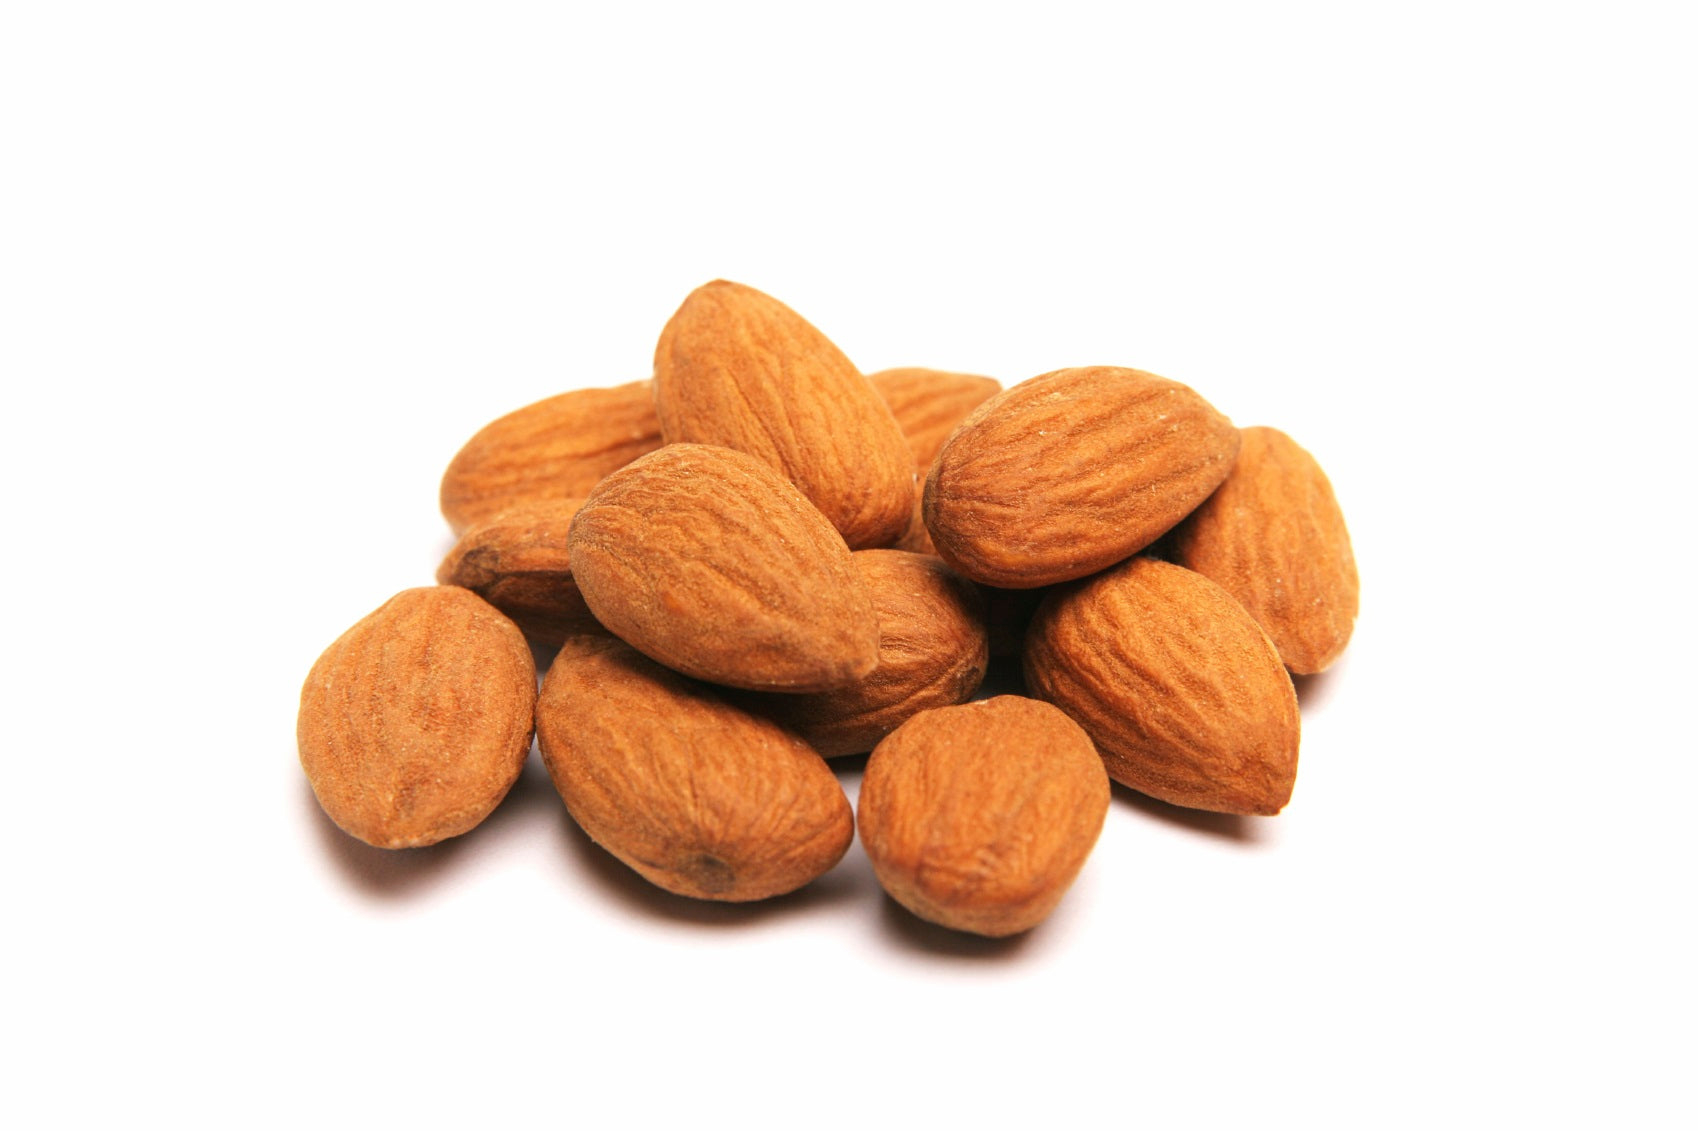 Raw Organic Almonds